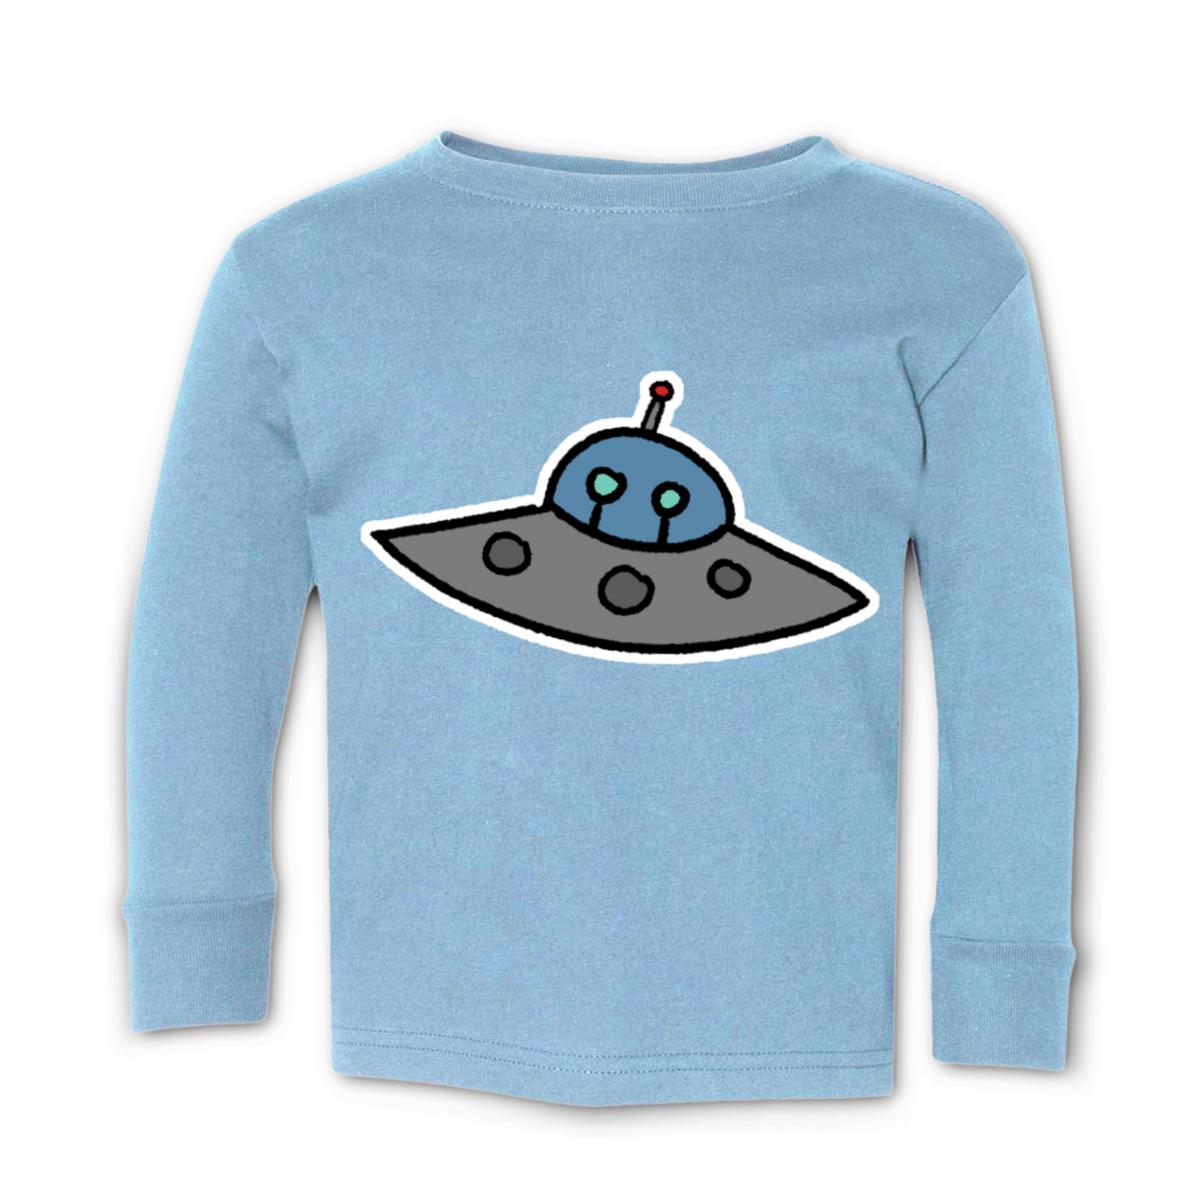 Flying Saucer Toddler Long Sleeve Tee 56T light-blue